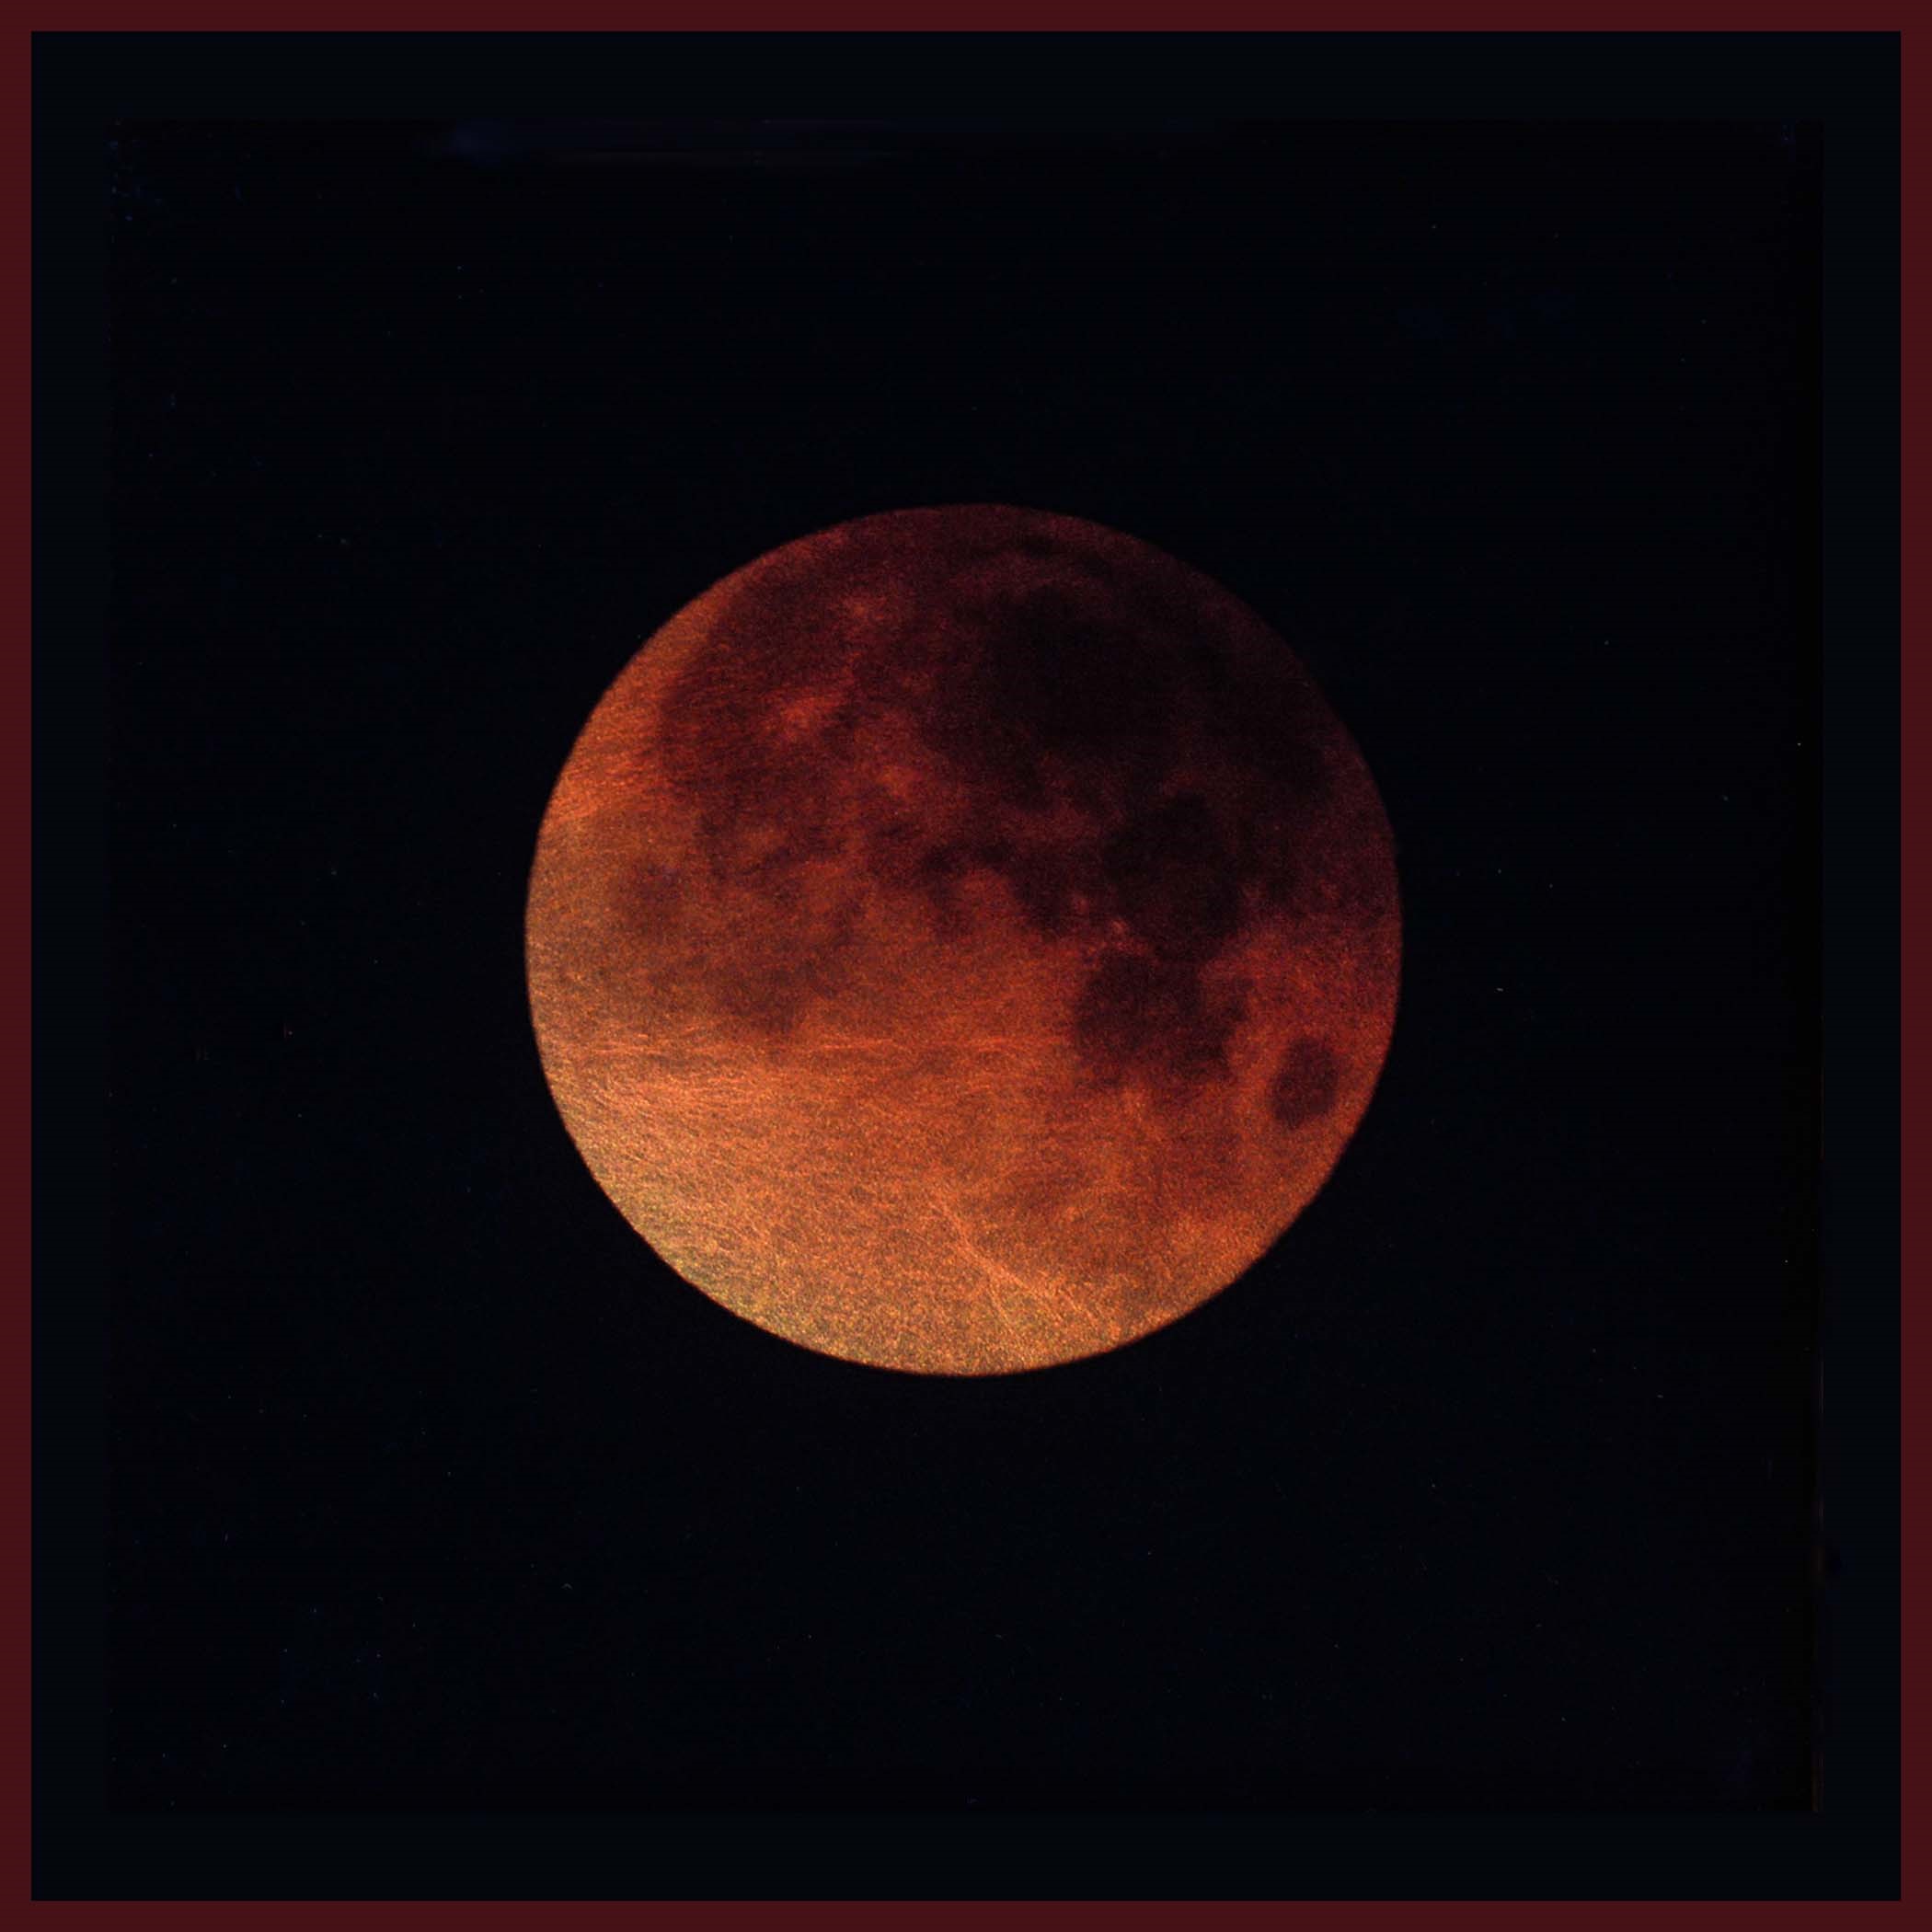 Kate Breakey, Lunar Eclipse Jan 2018 Tucson Az (Blood moon